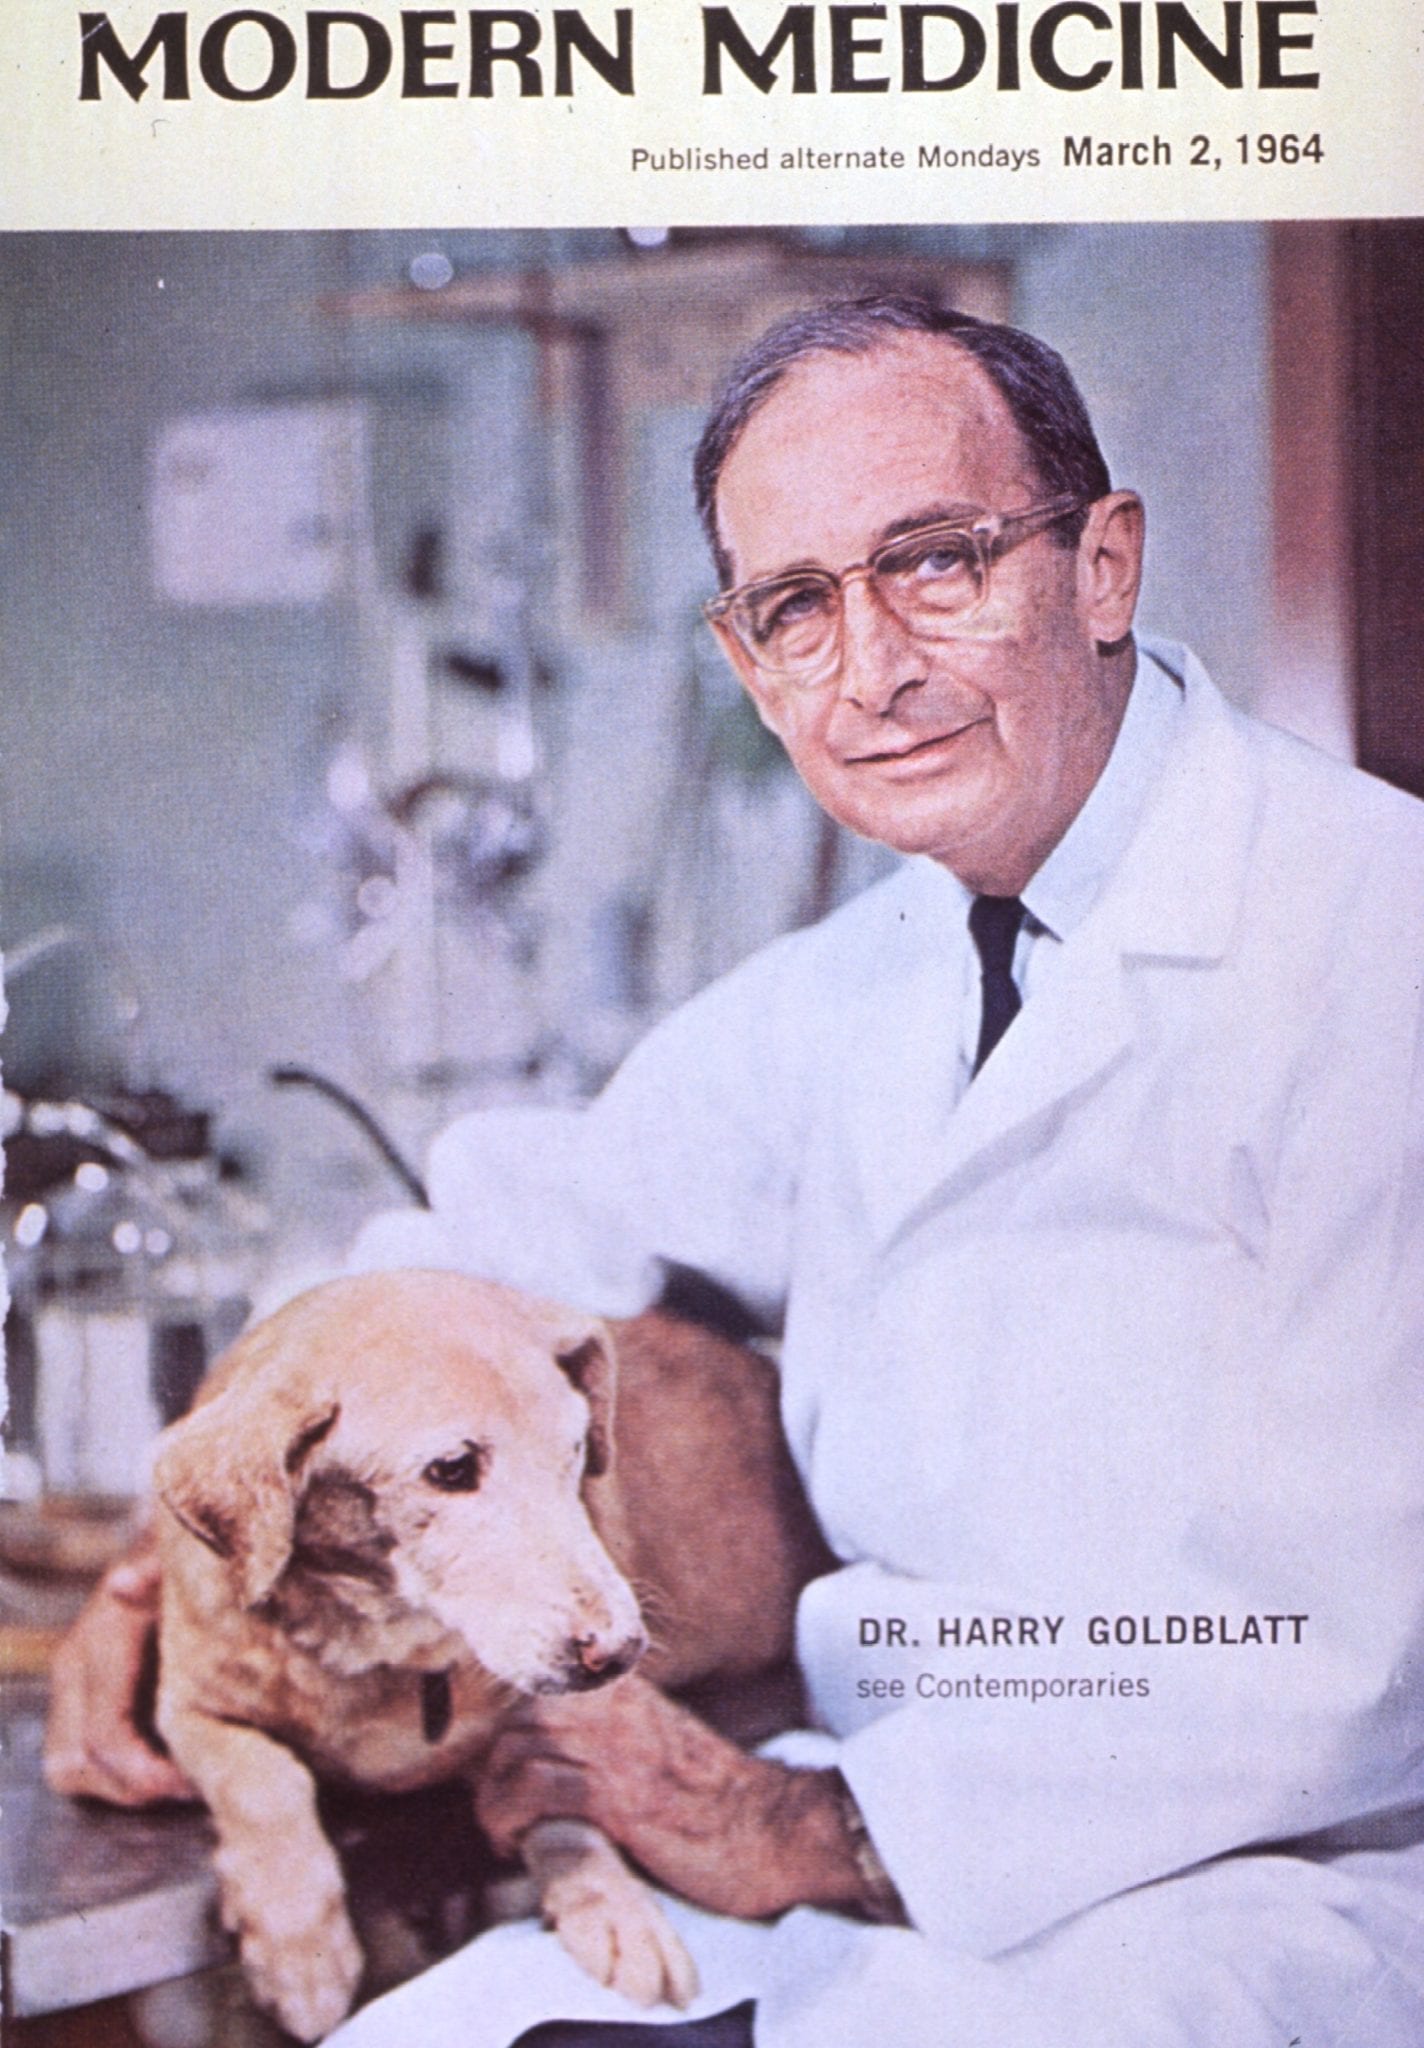 Harry Goldblatt on the cover of Modern Medicine